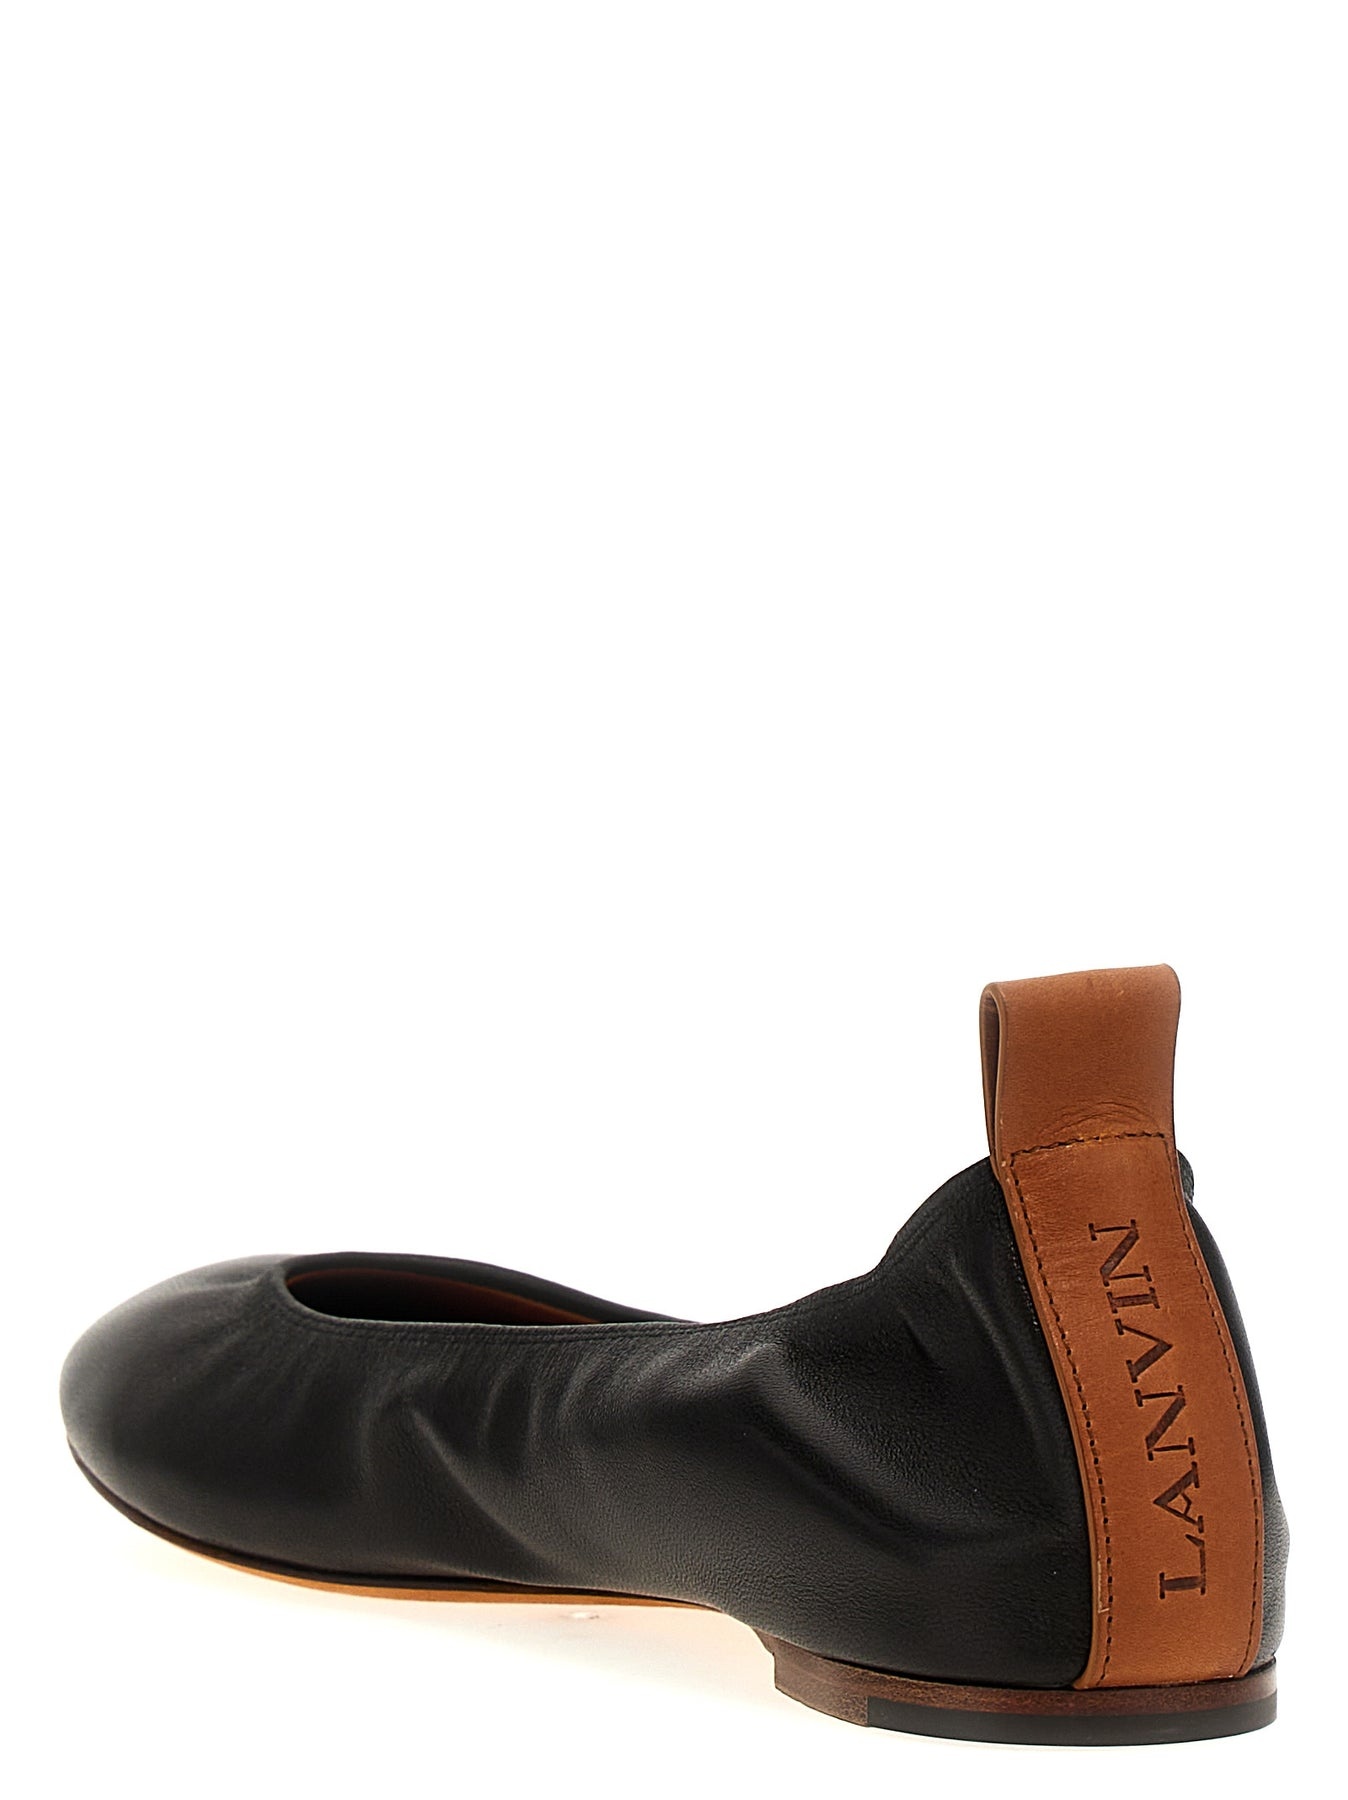 Nappa Ballet Flats Flat Shoes Black - 3